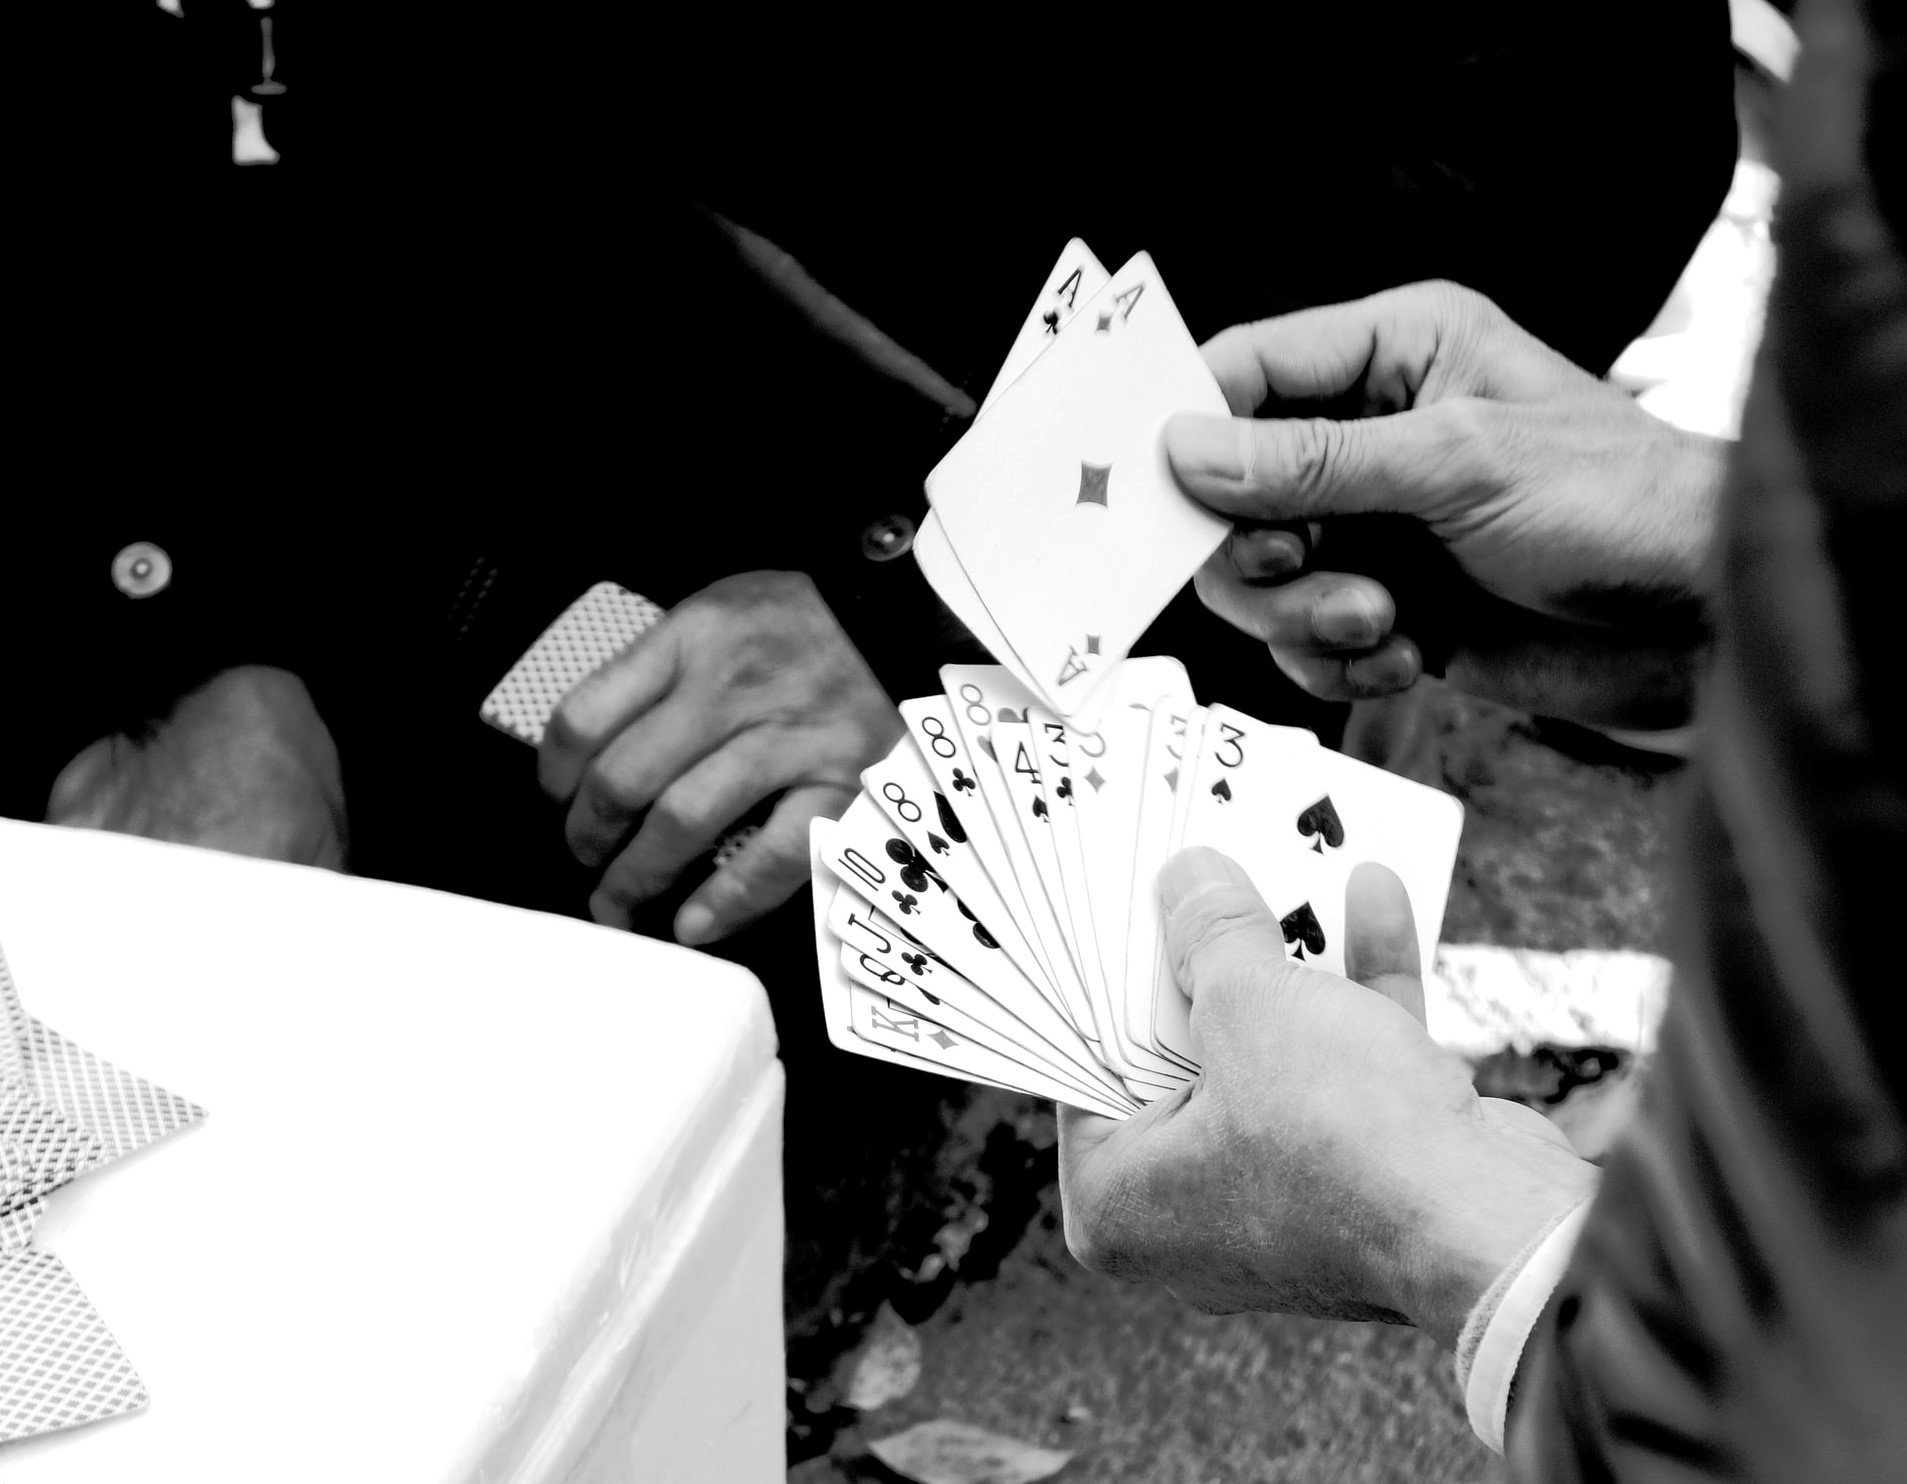  Männer spielen Karten Nahaufnahme Schwarzweiss